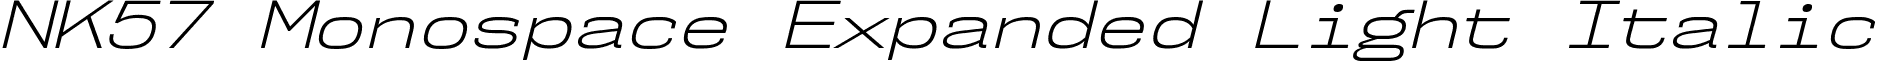 NK57 Monospace Expanded Light Italic font - nk57-monospace.expanded-light-italic.ttf